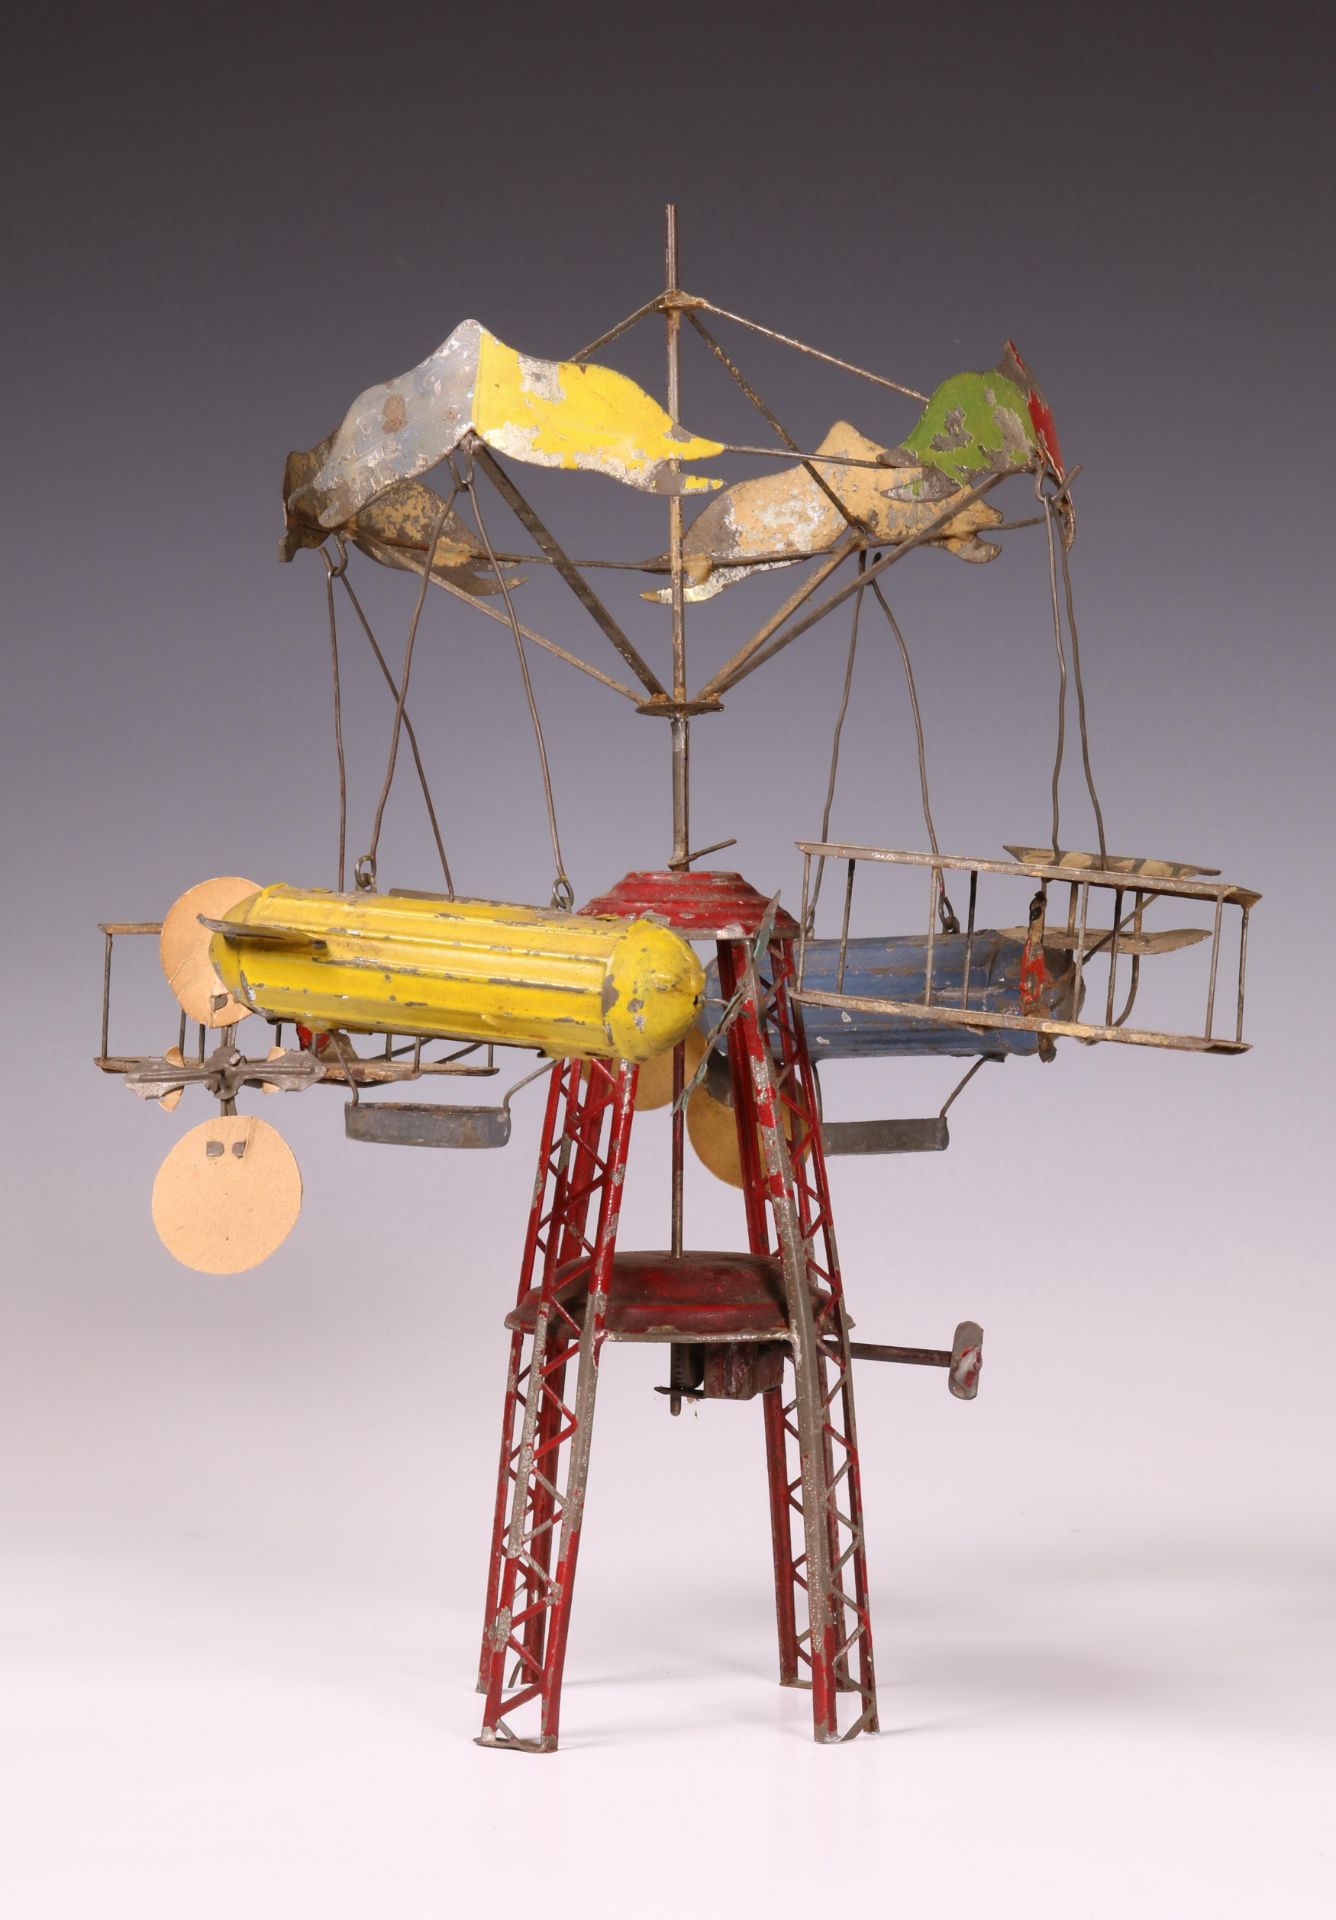 Duitsland, carrousel met vliegmachines, ca. 1900